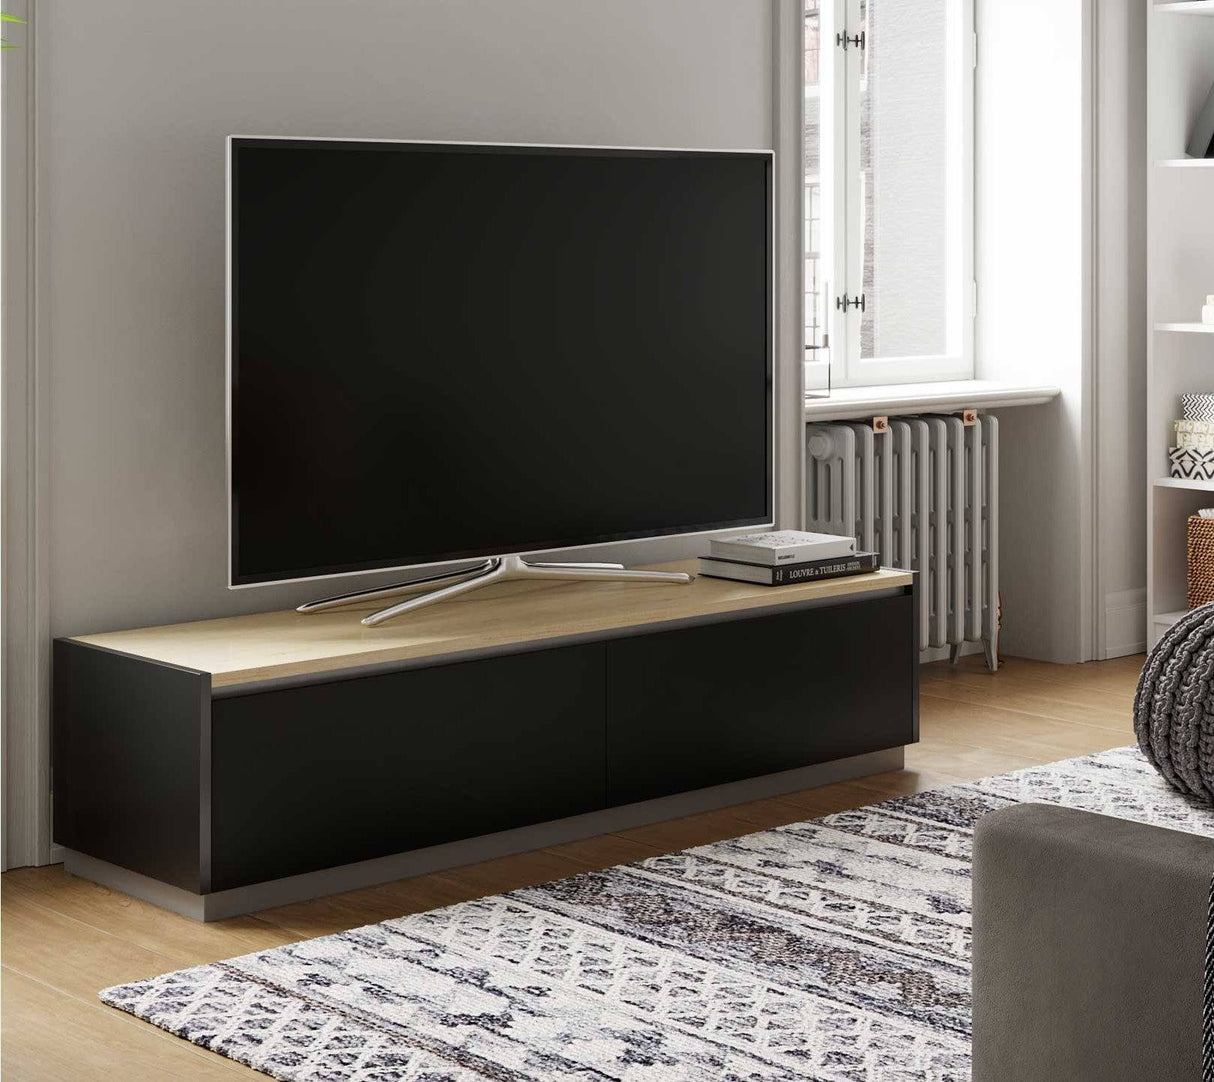 Alphason Horizon TV Cabinet with Oak/Walnut Reversible Top (ADHO1600)